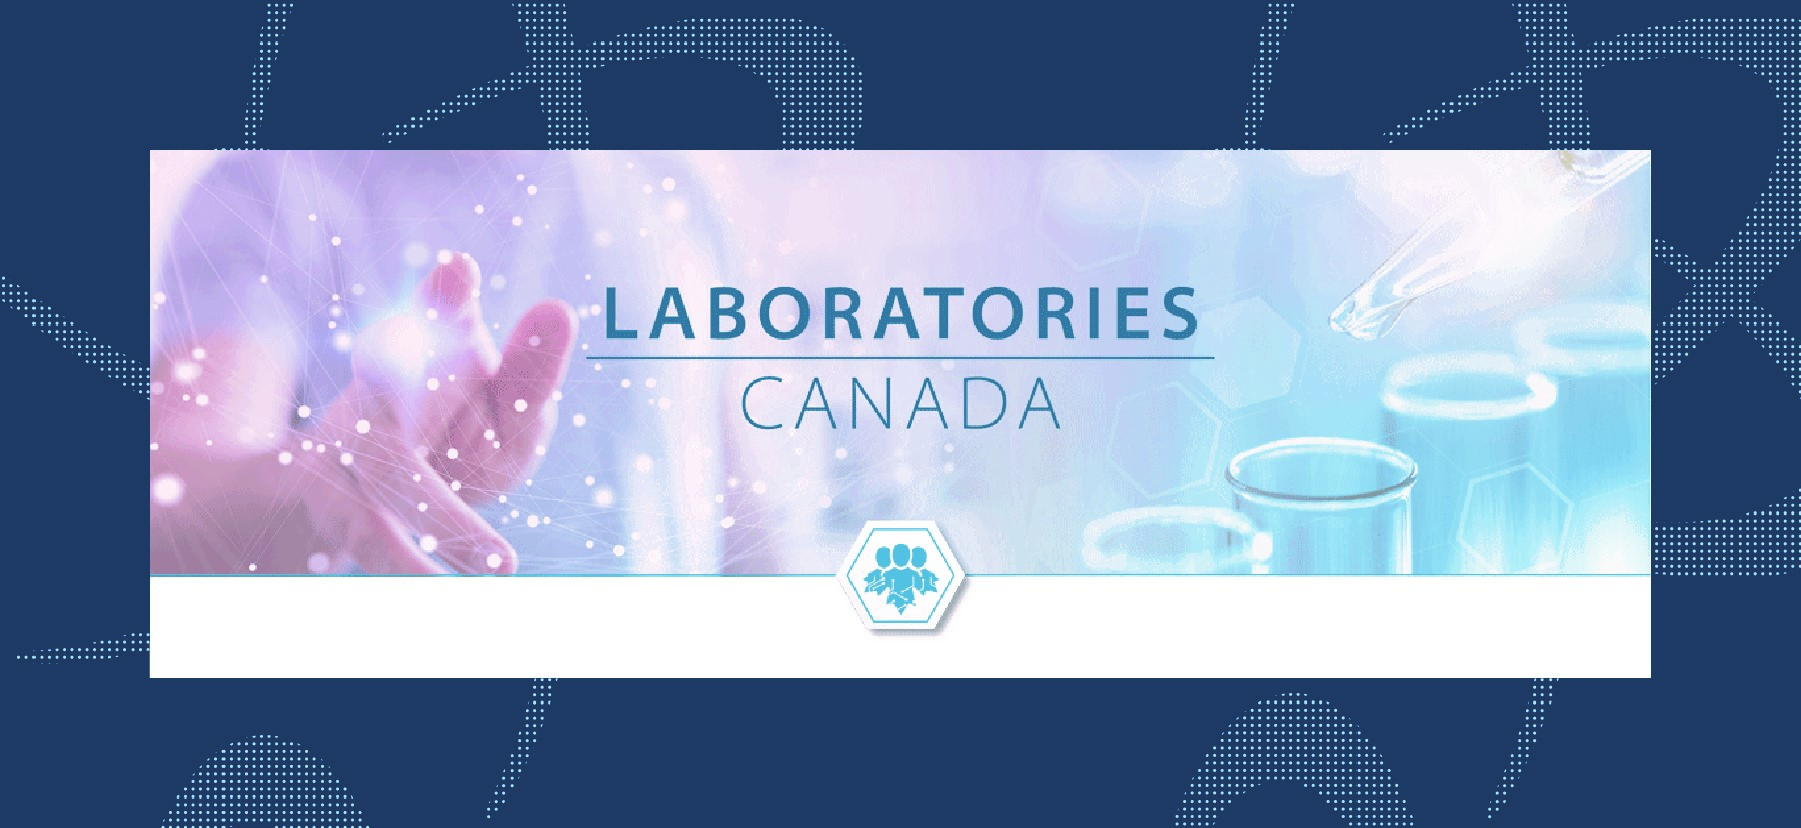 Laboratories Canada logo